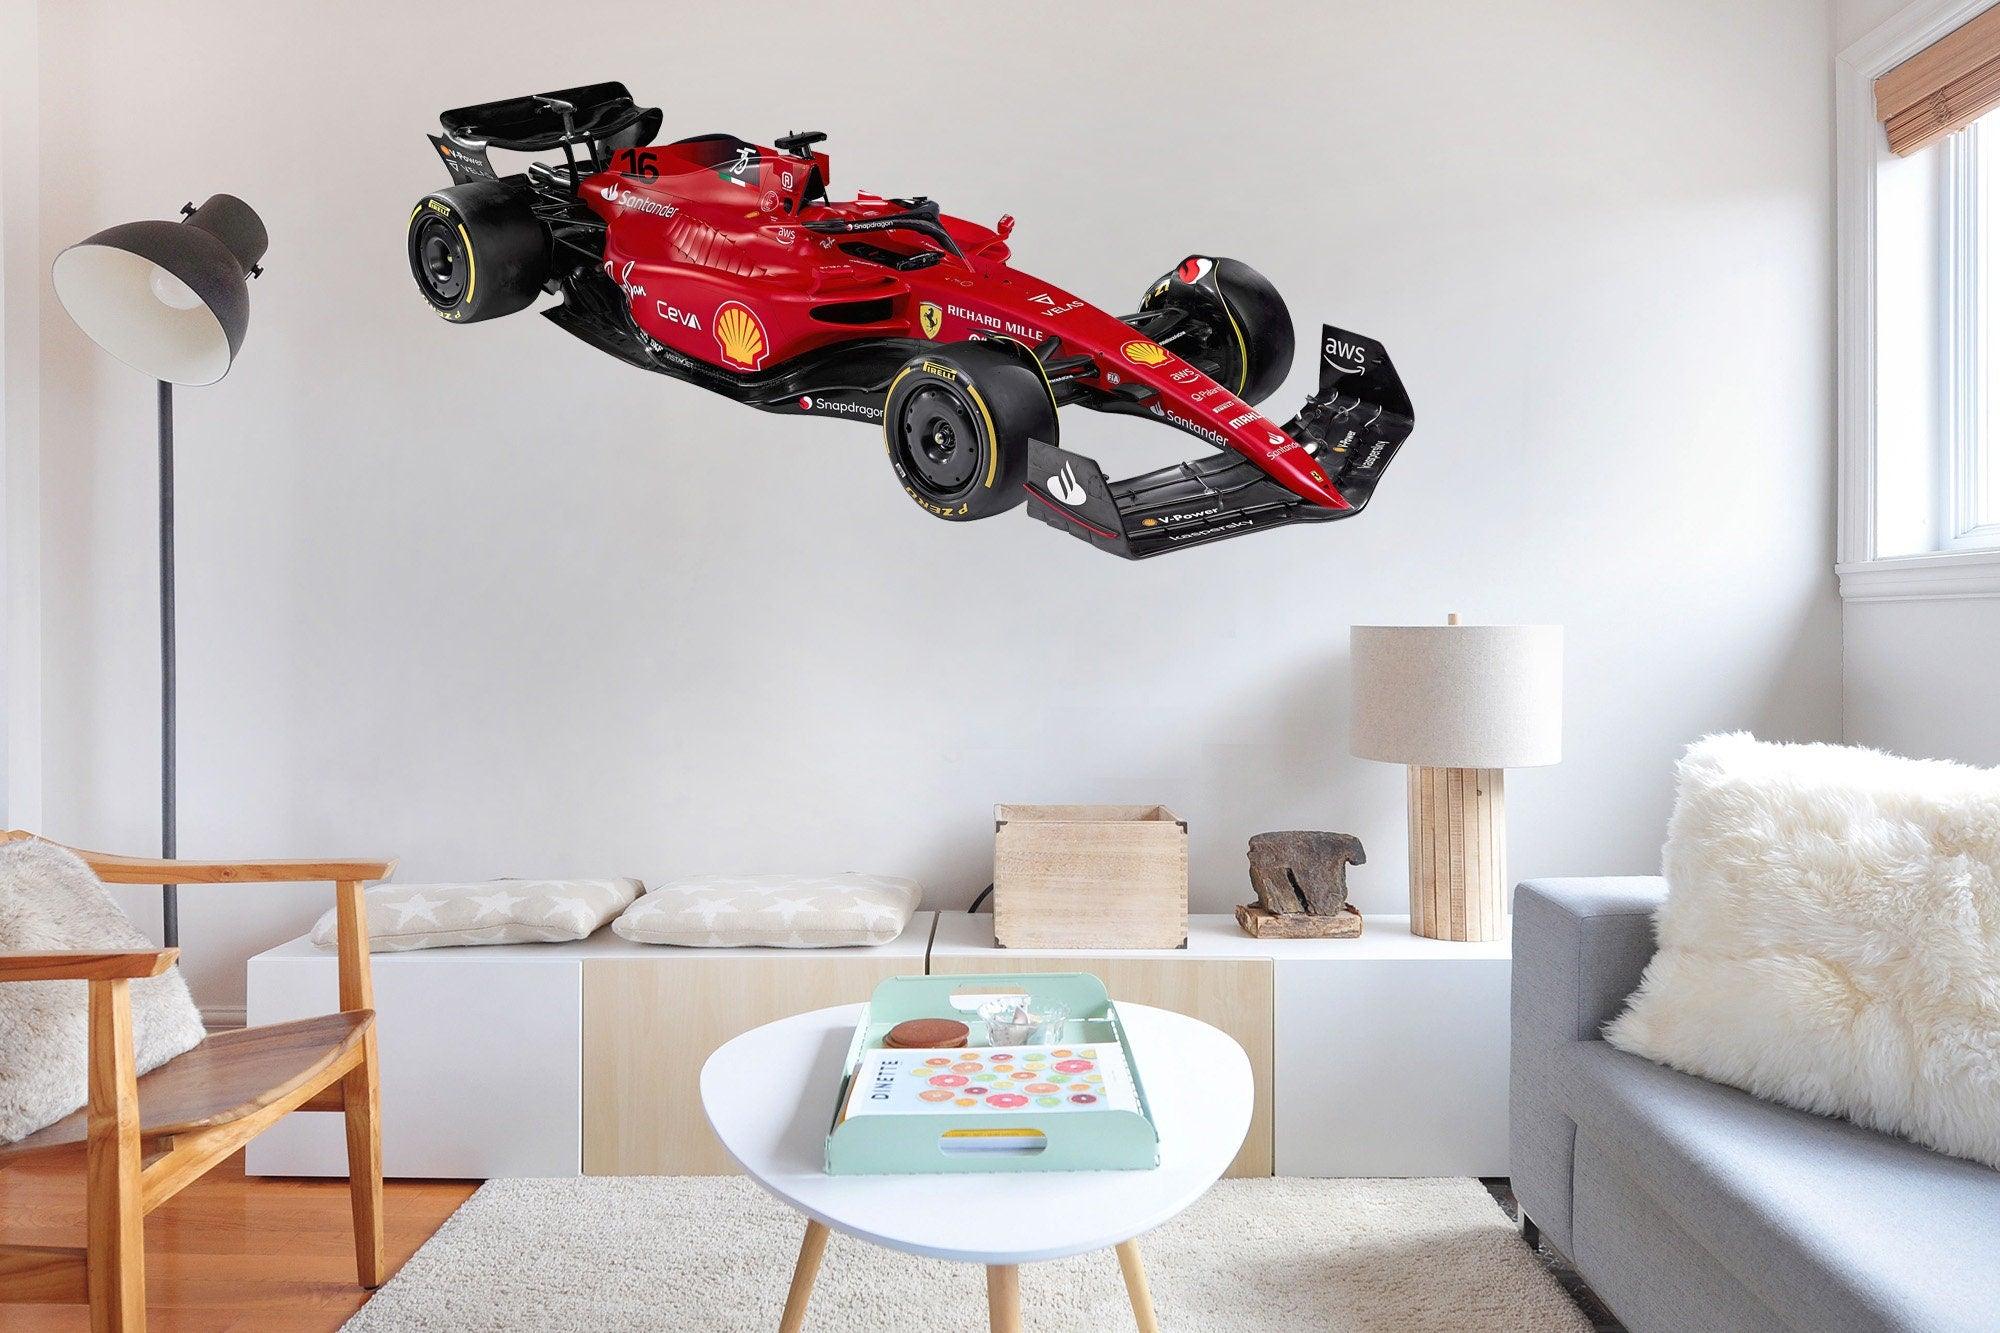 Formula 1, 2022 Ferrari #16 Charles Leclerc, Wall Decal Sticker 014